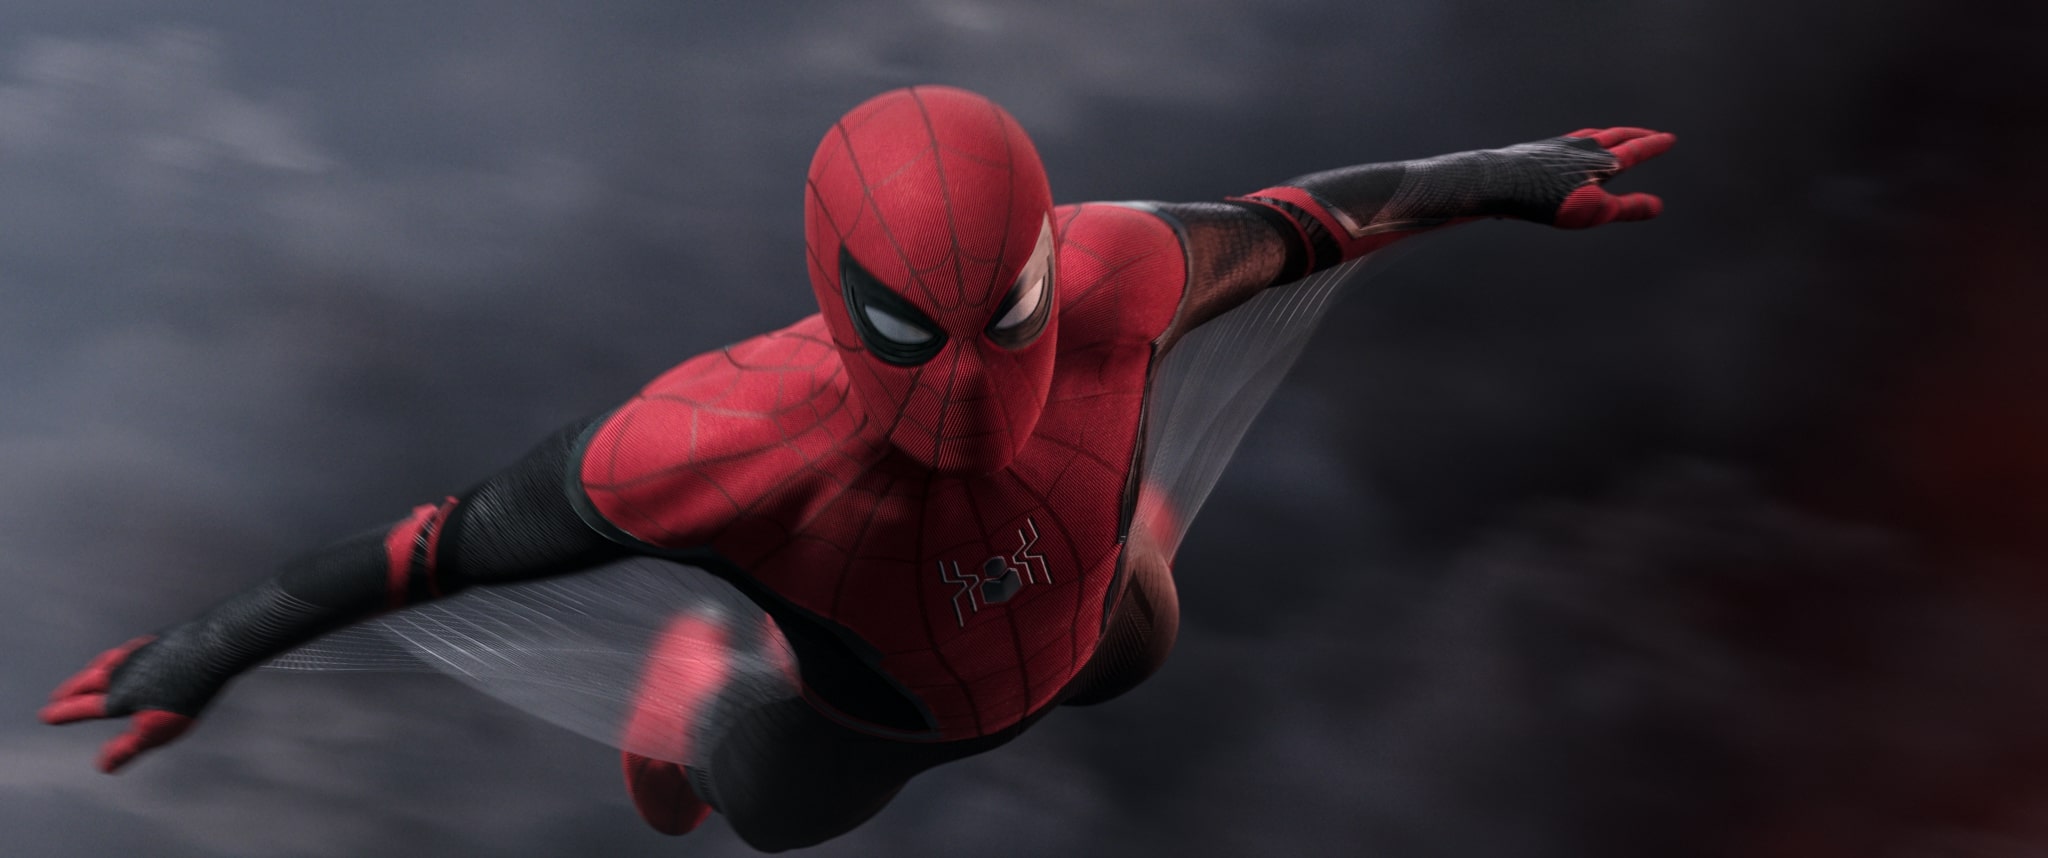 Spider-Man: Far From Home, rivelati nuovi poster cinesi thumbnail